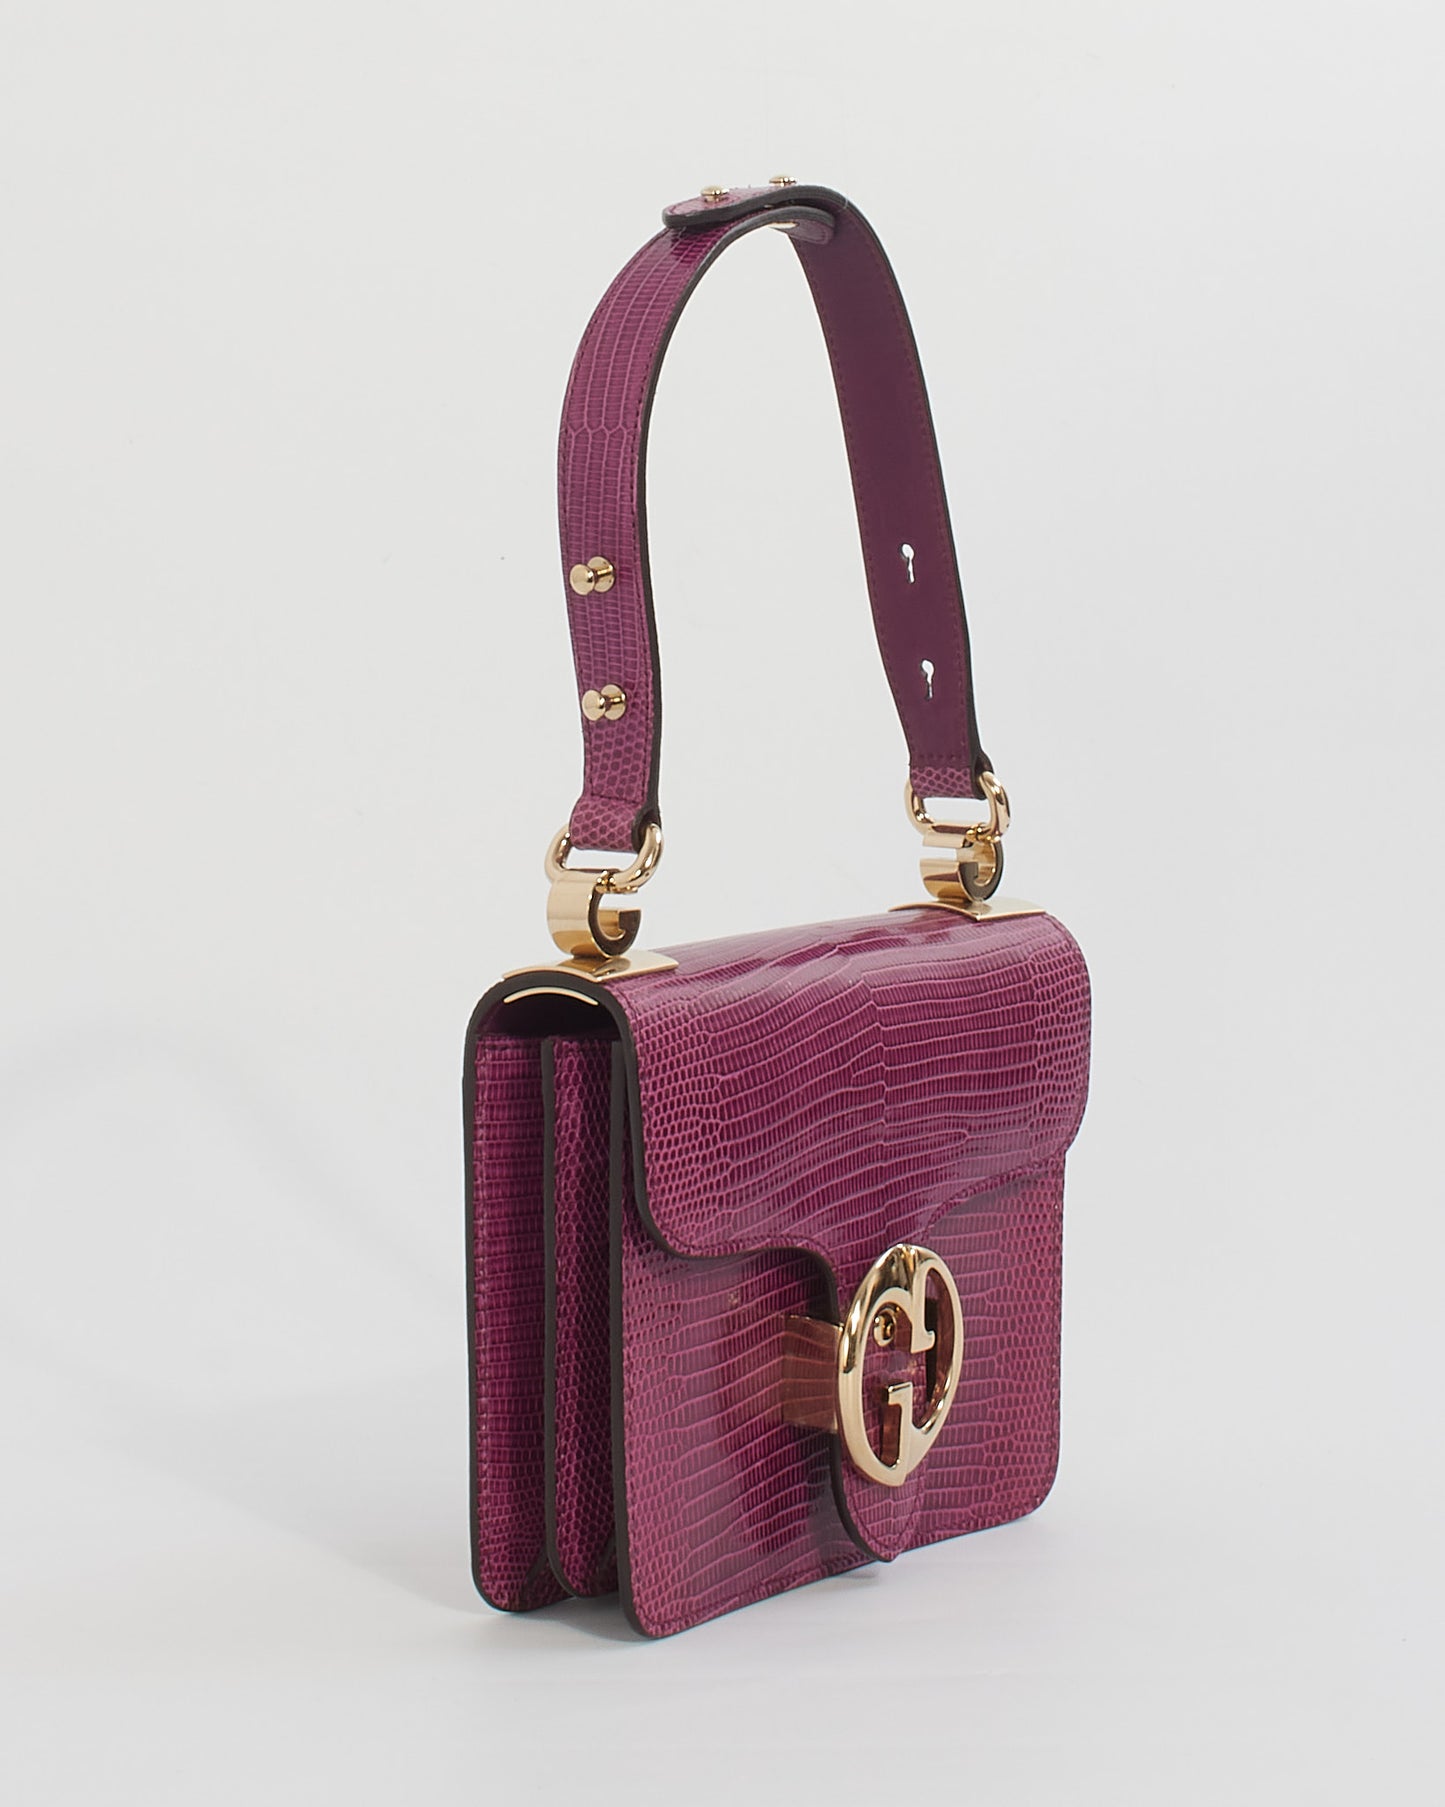 Petit sac à poignée supérieure Gucci Purple Lizard 1973